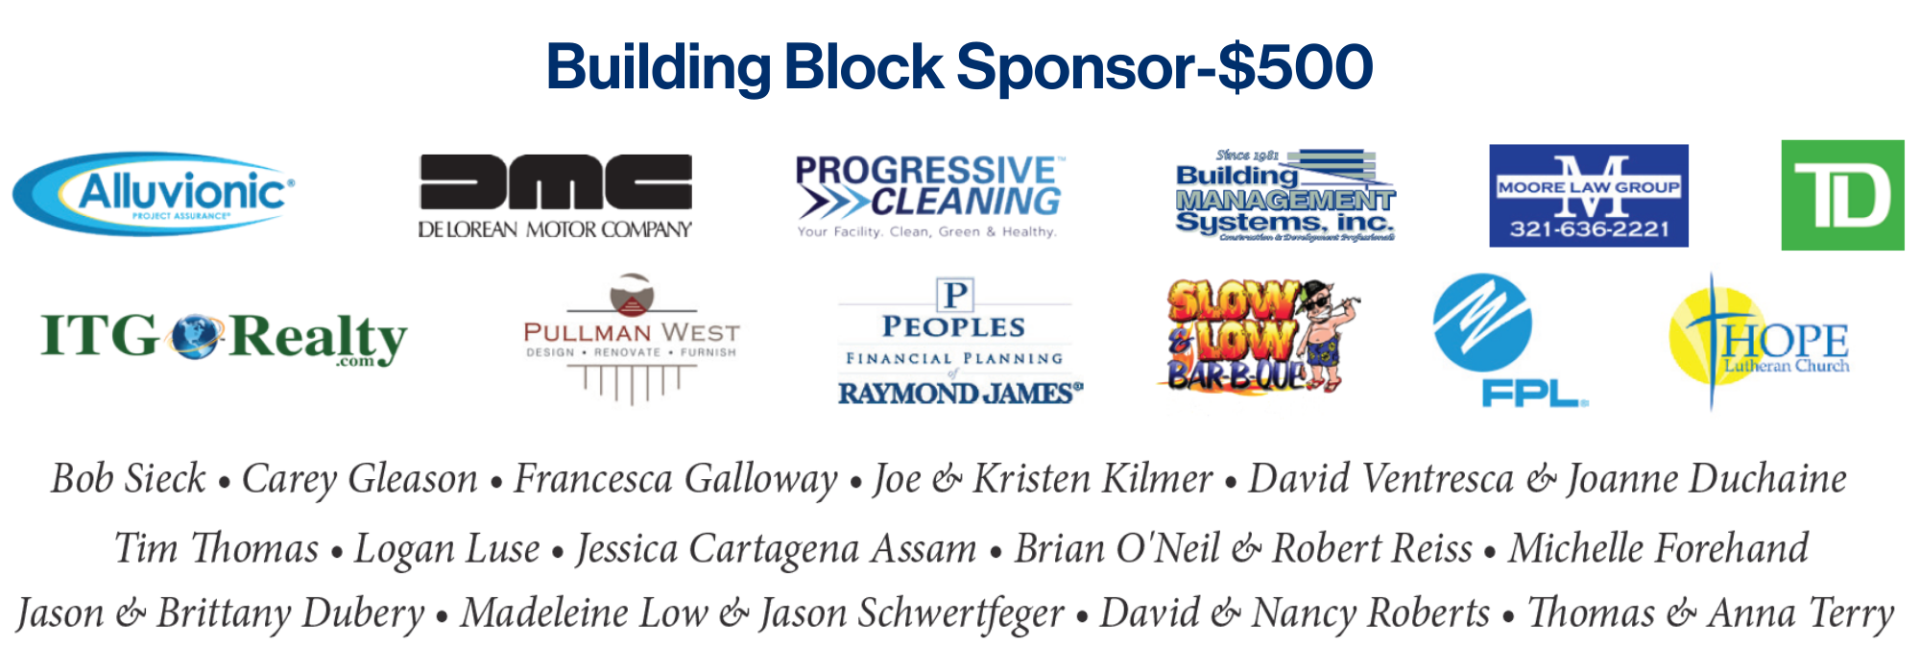 Building Block Sponsor Event Logos